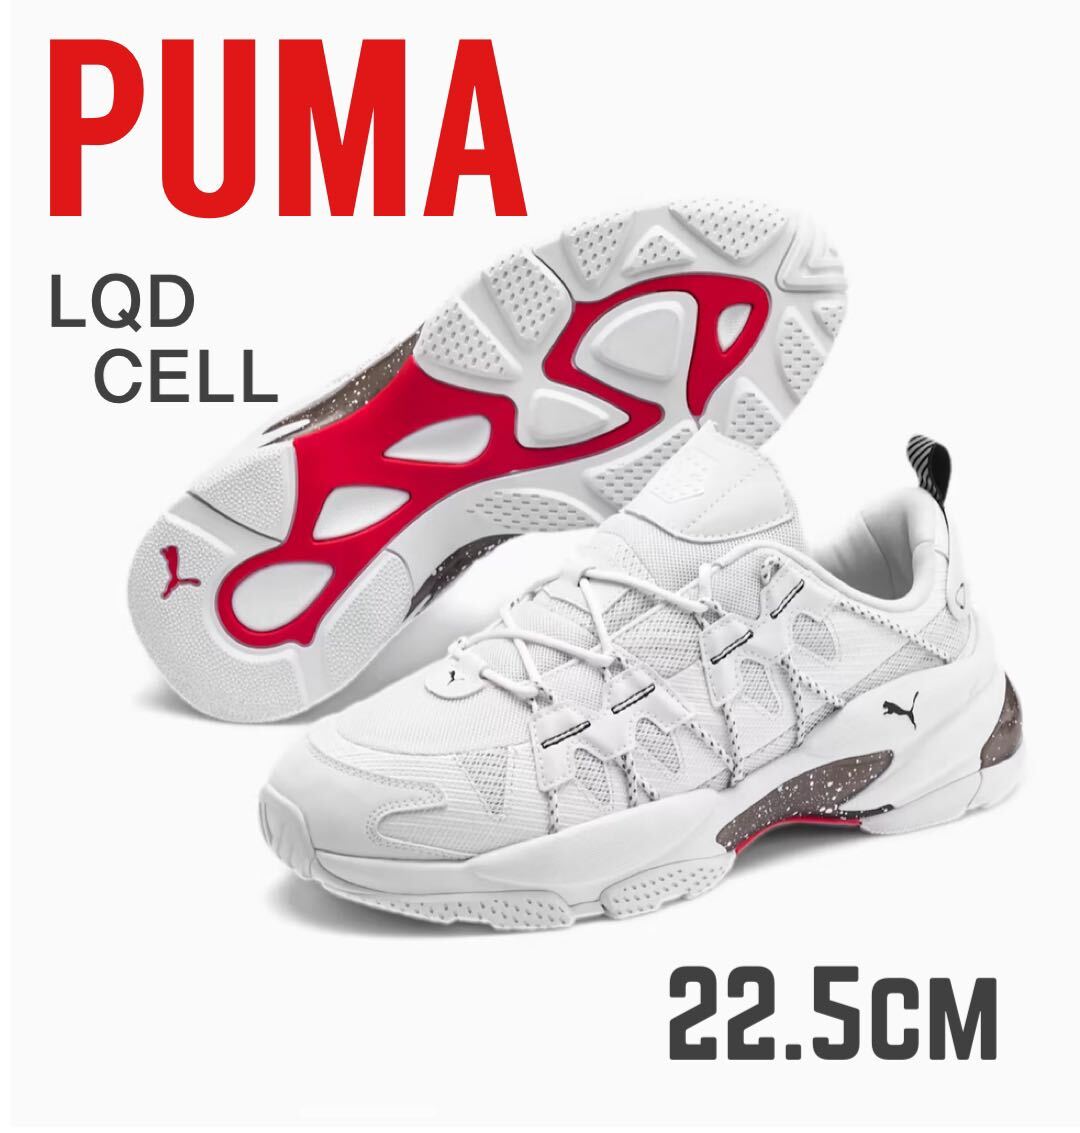 PUMA LQD CELL OMEGA DENSITY Puma cell Omega электронный ti новый товар 22.5cm * без коробки . отправка 